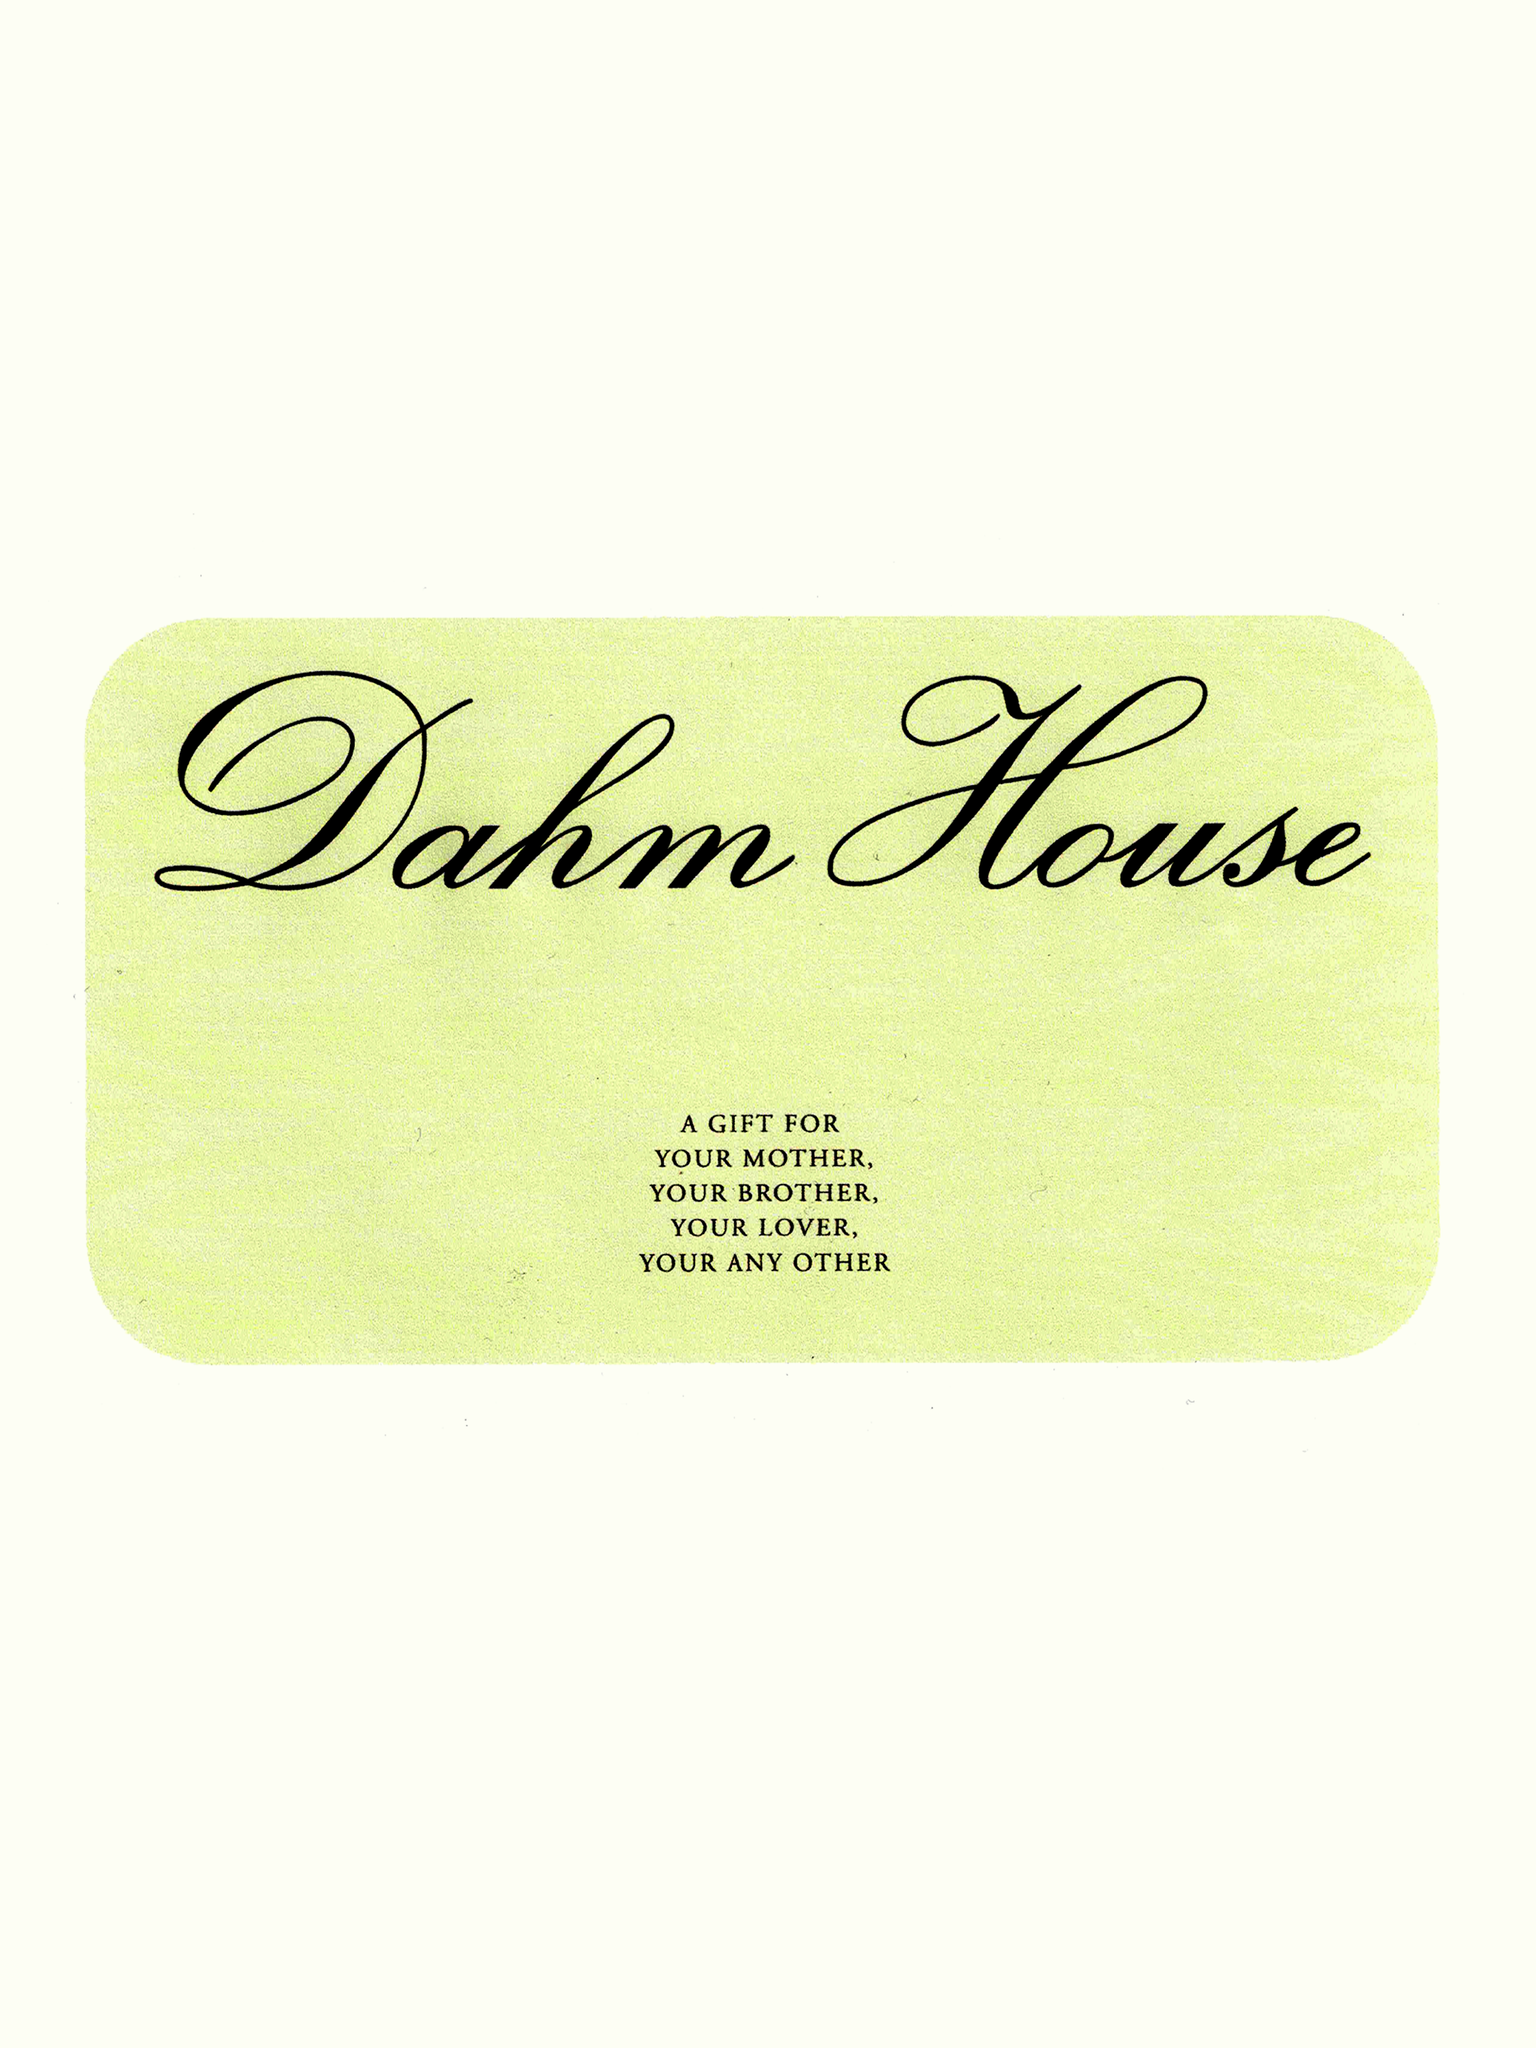 Dahm House Gift Card